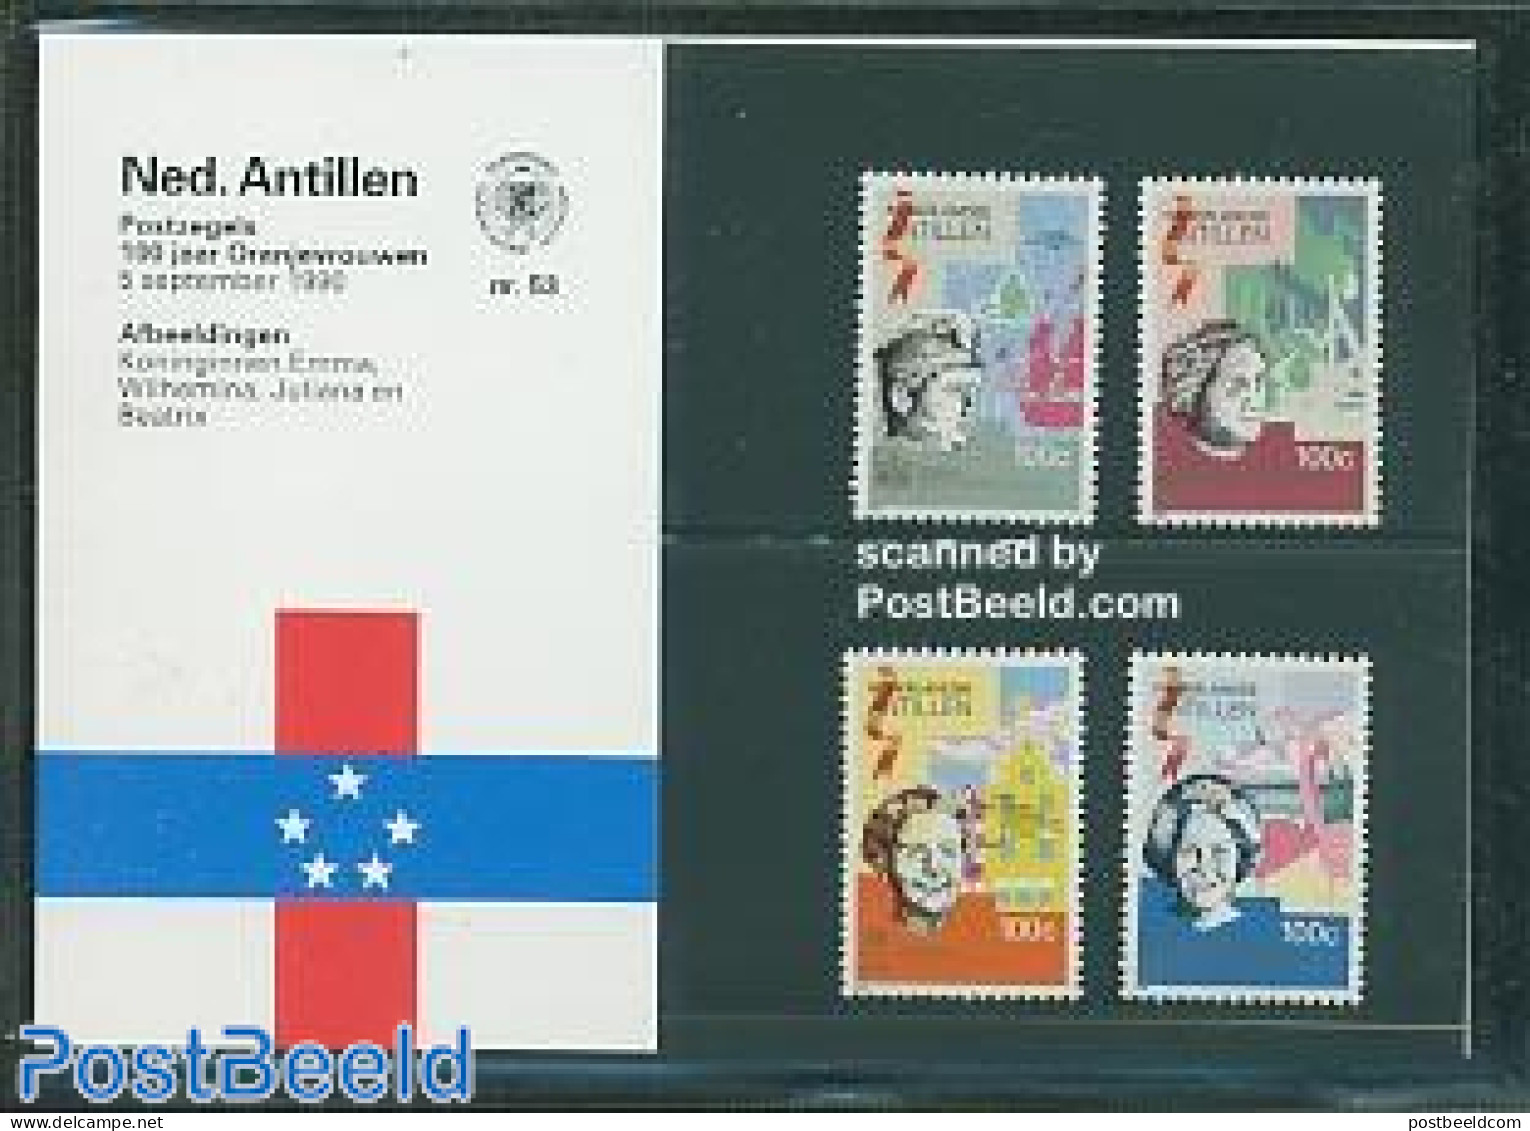 Netherlands Antilles 1990 Four Queens Presentation Pack 53, Mint NH, History - Various - Kings & Queens (Royalty) - Maps - Koniklijke Families